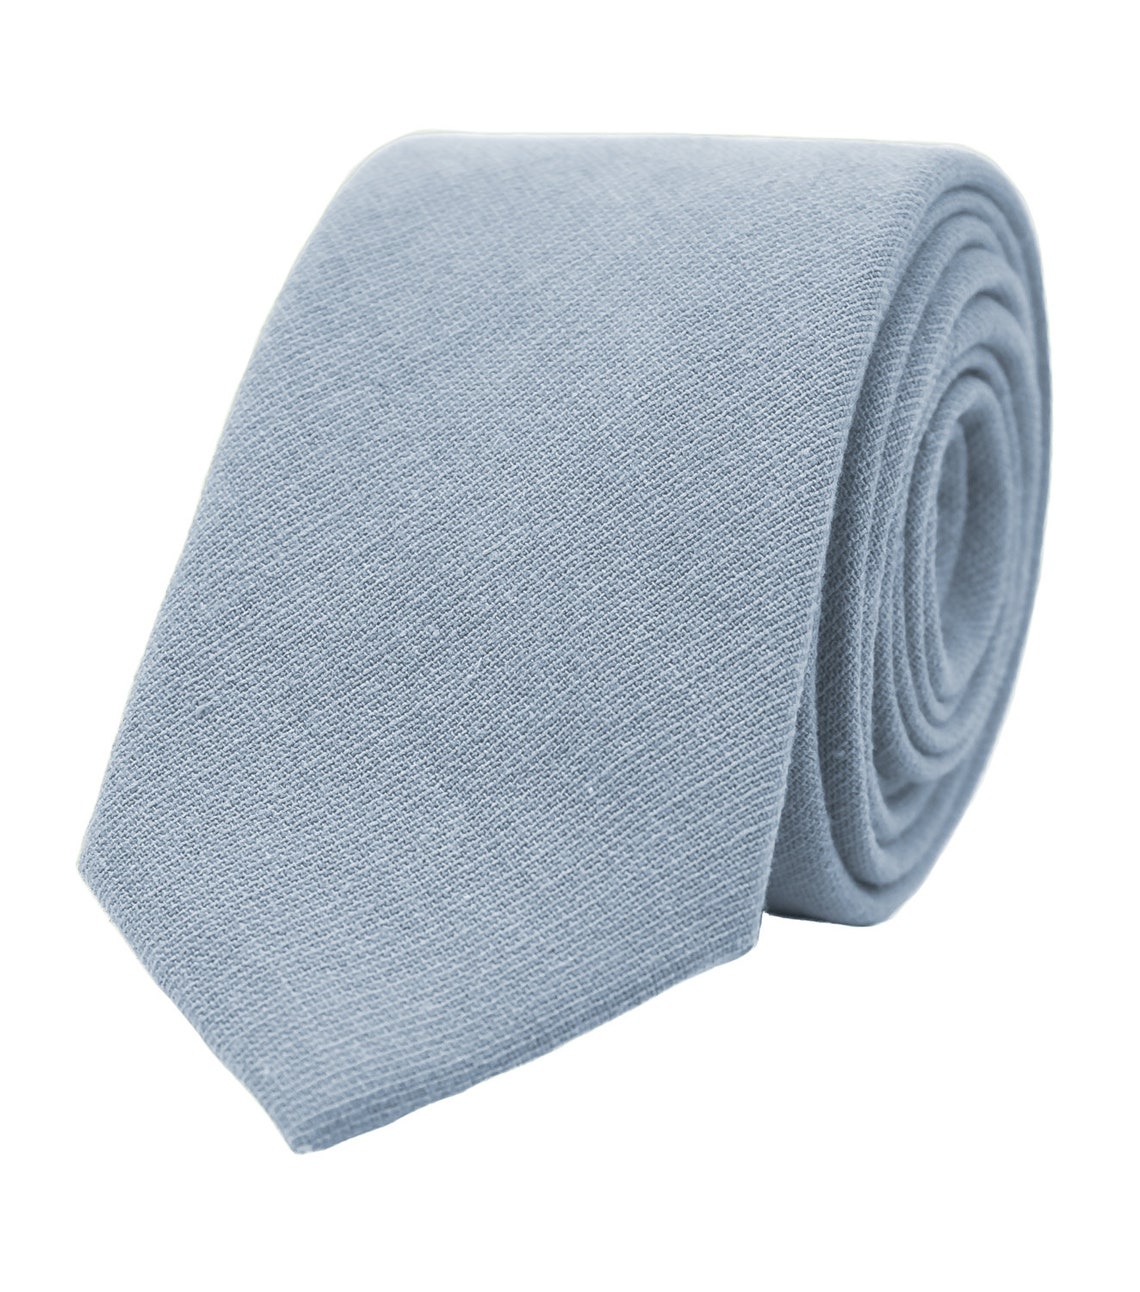 Solid dusty blue necktie groomsmen cotton tie light blue | Etsy